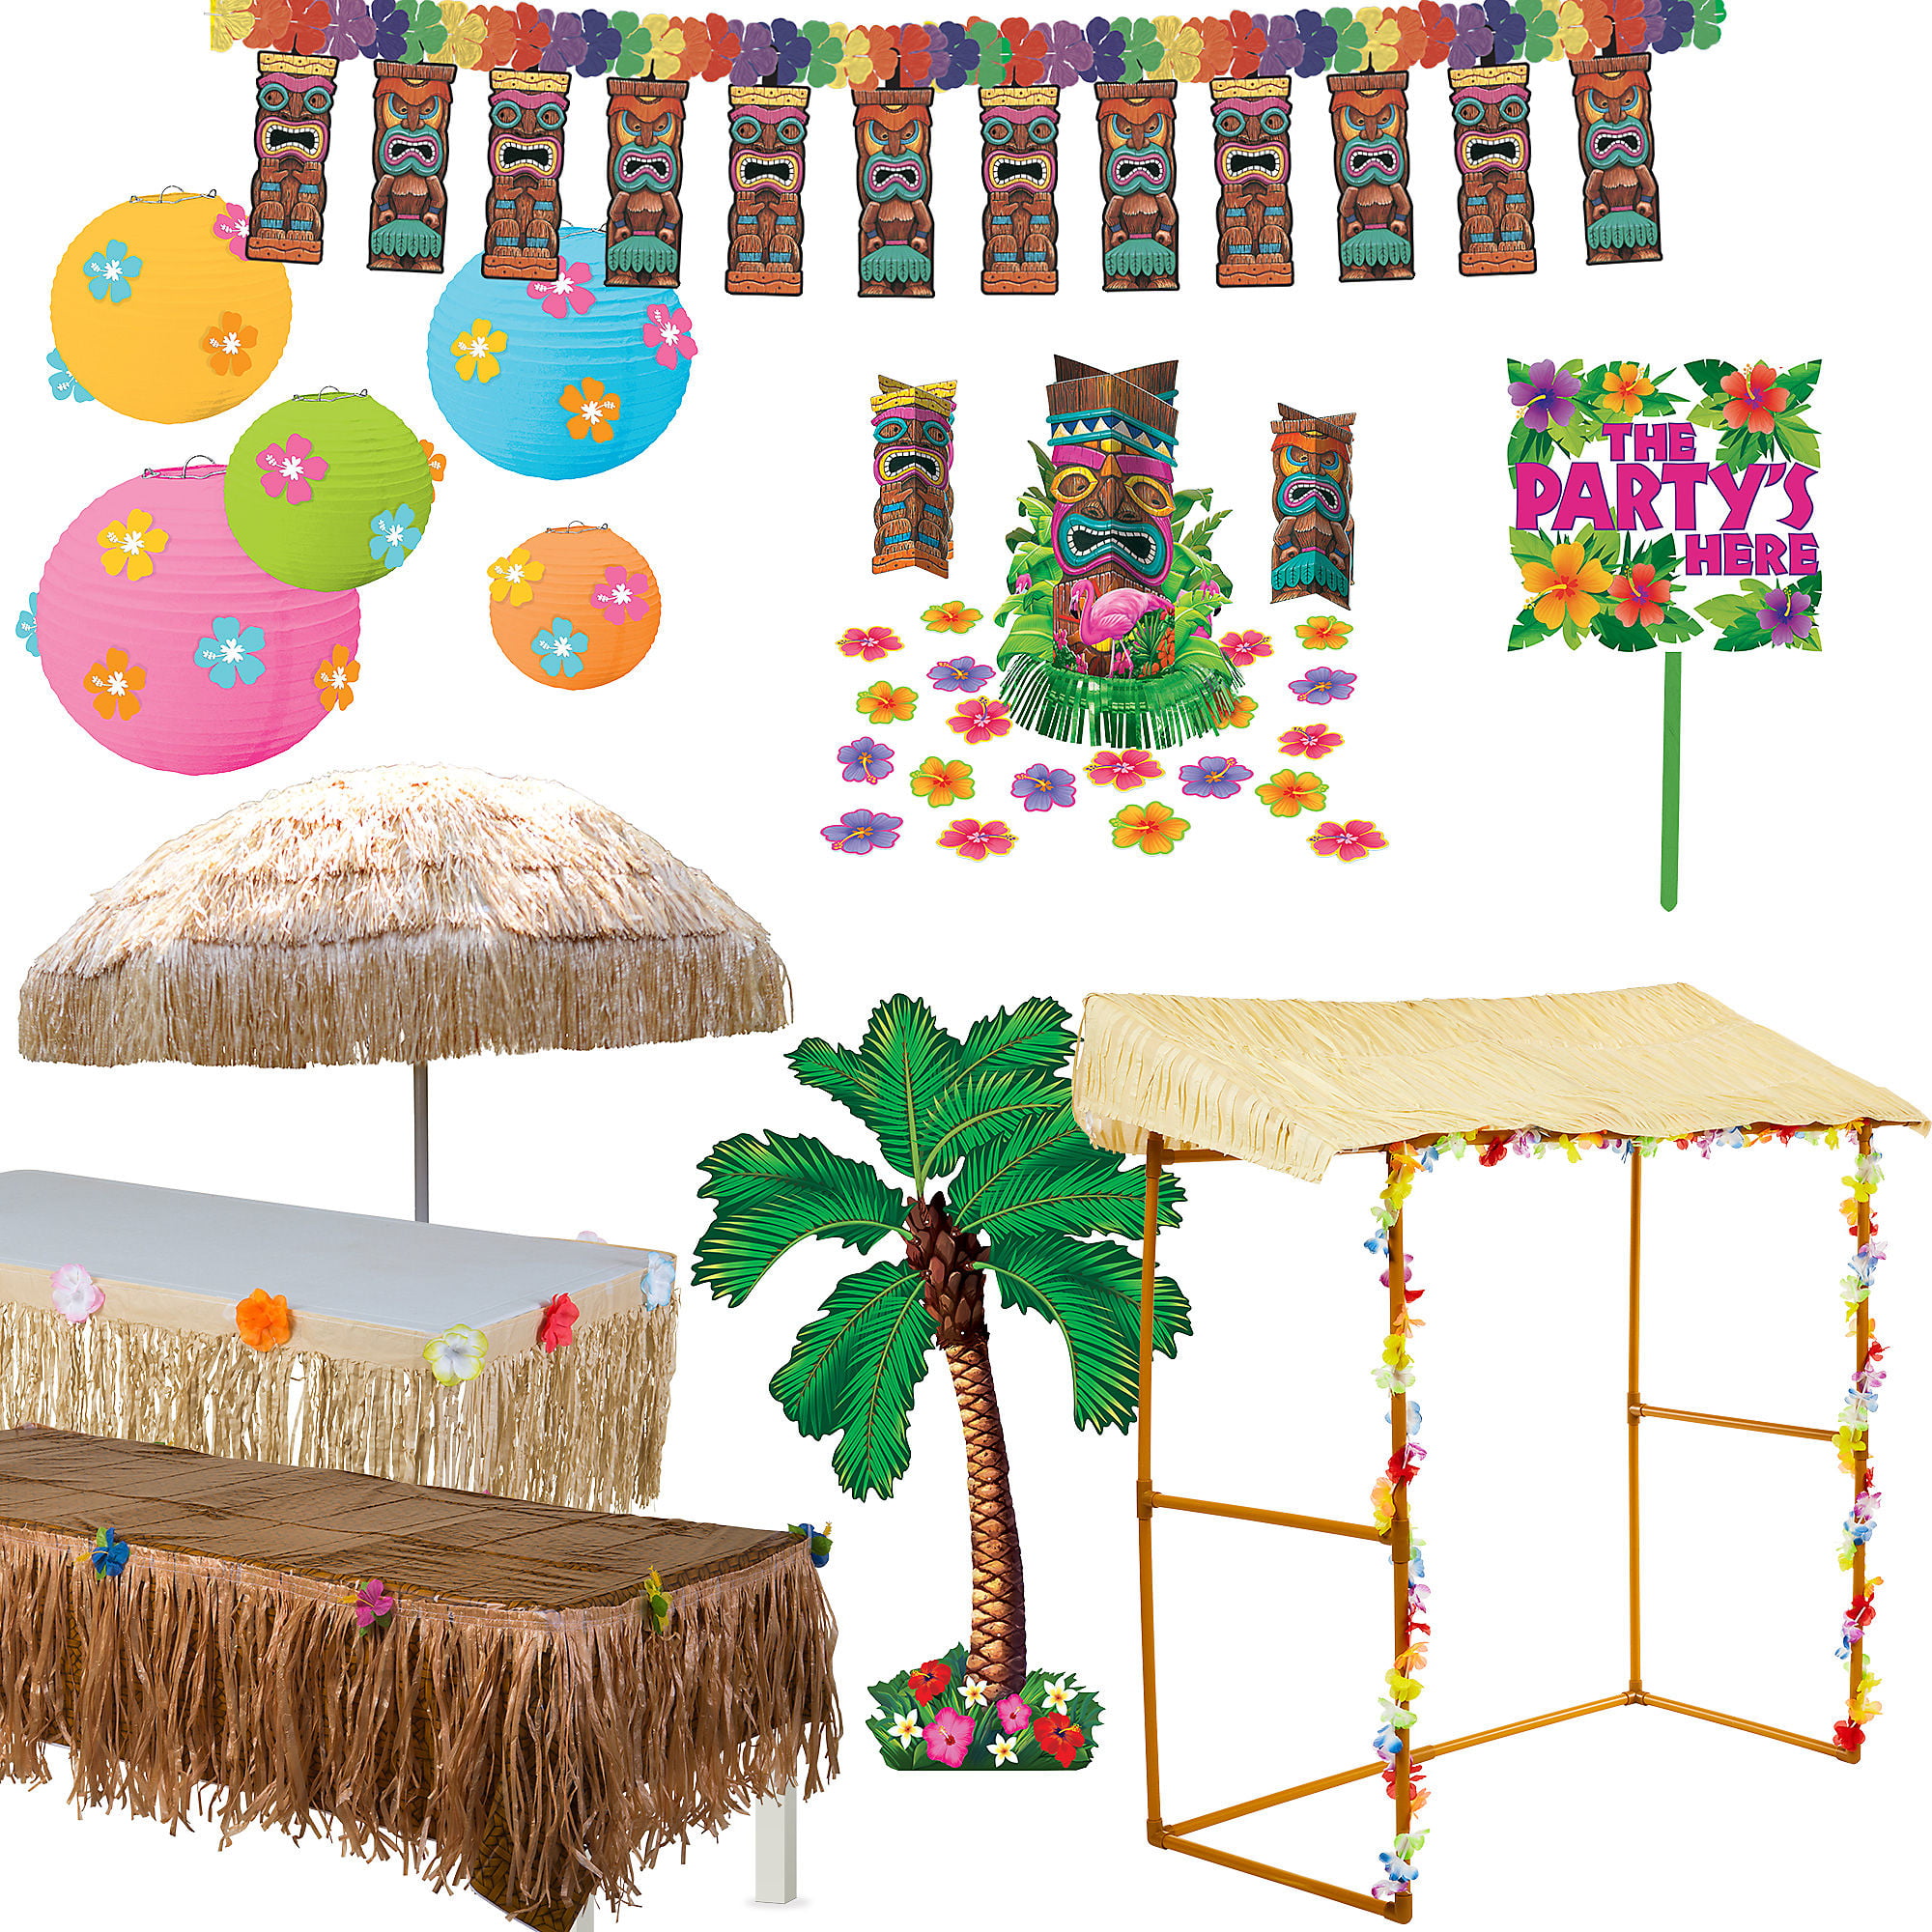 Full Tiki Party Mega Decorations Kit (Includes Tiki Bar, Decor, Props and More)